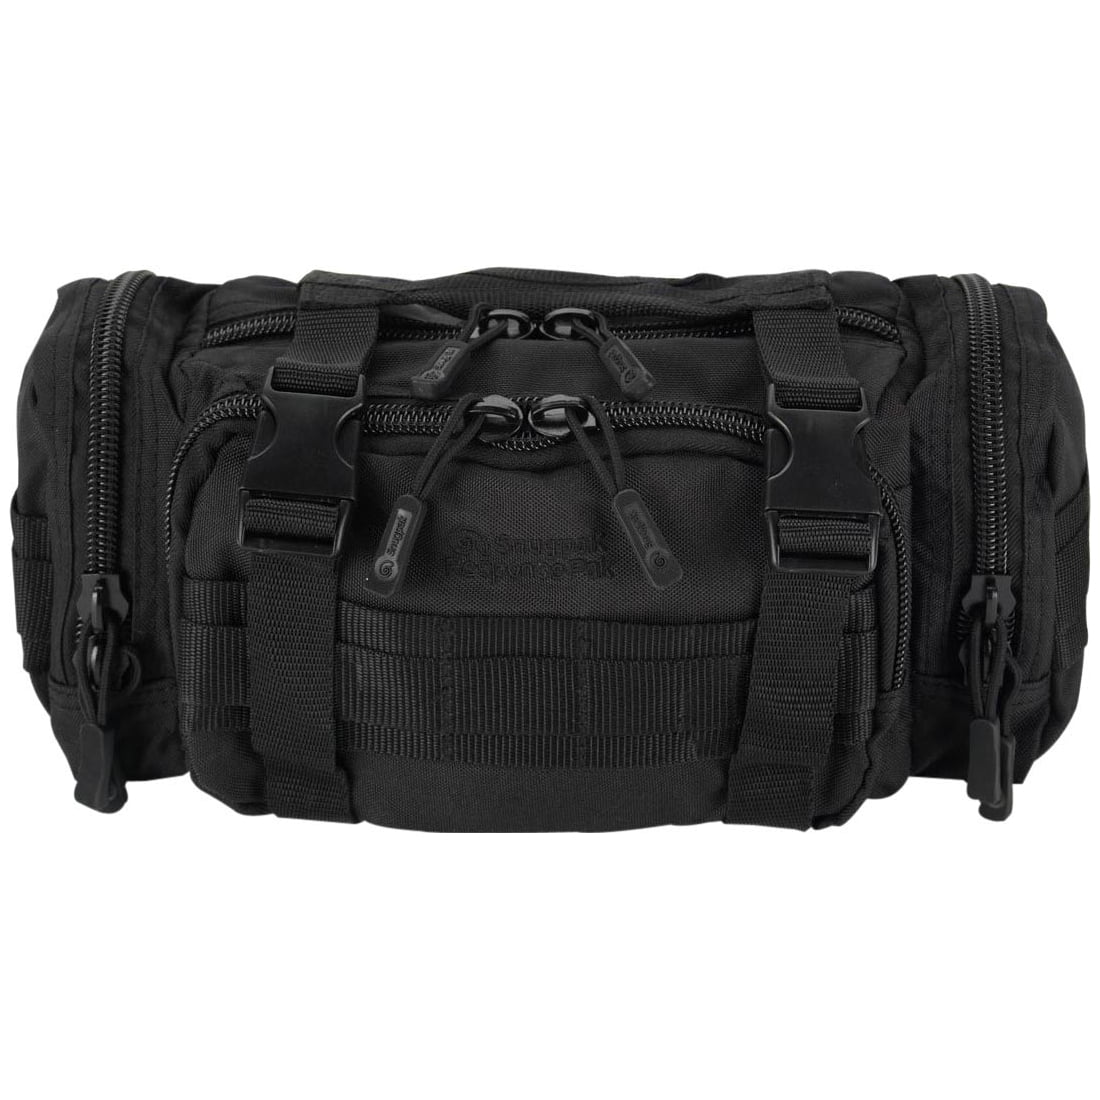 Snugpak Carrying Case Medical Equipment, Black - Walmart.com